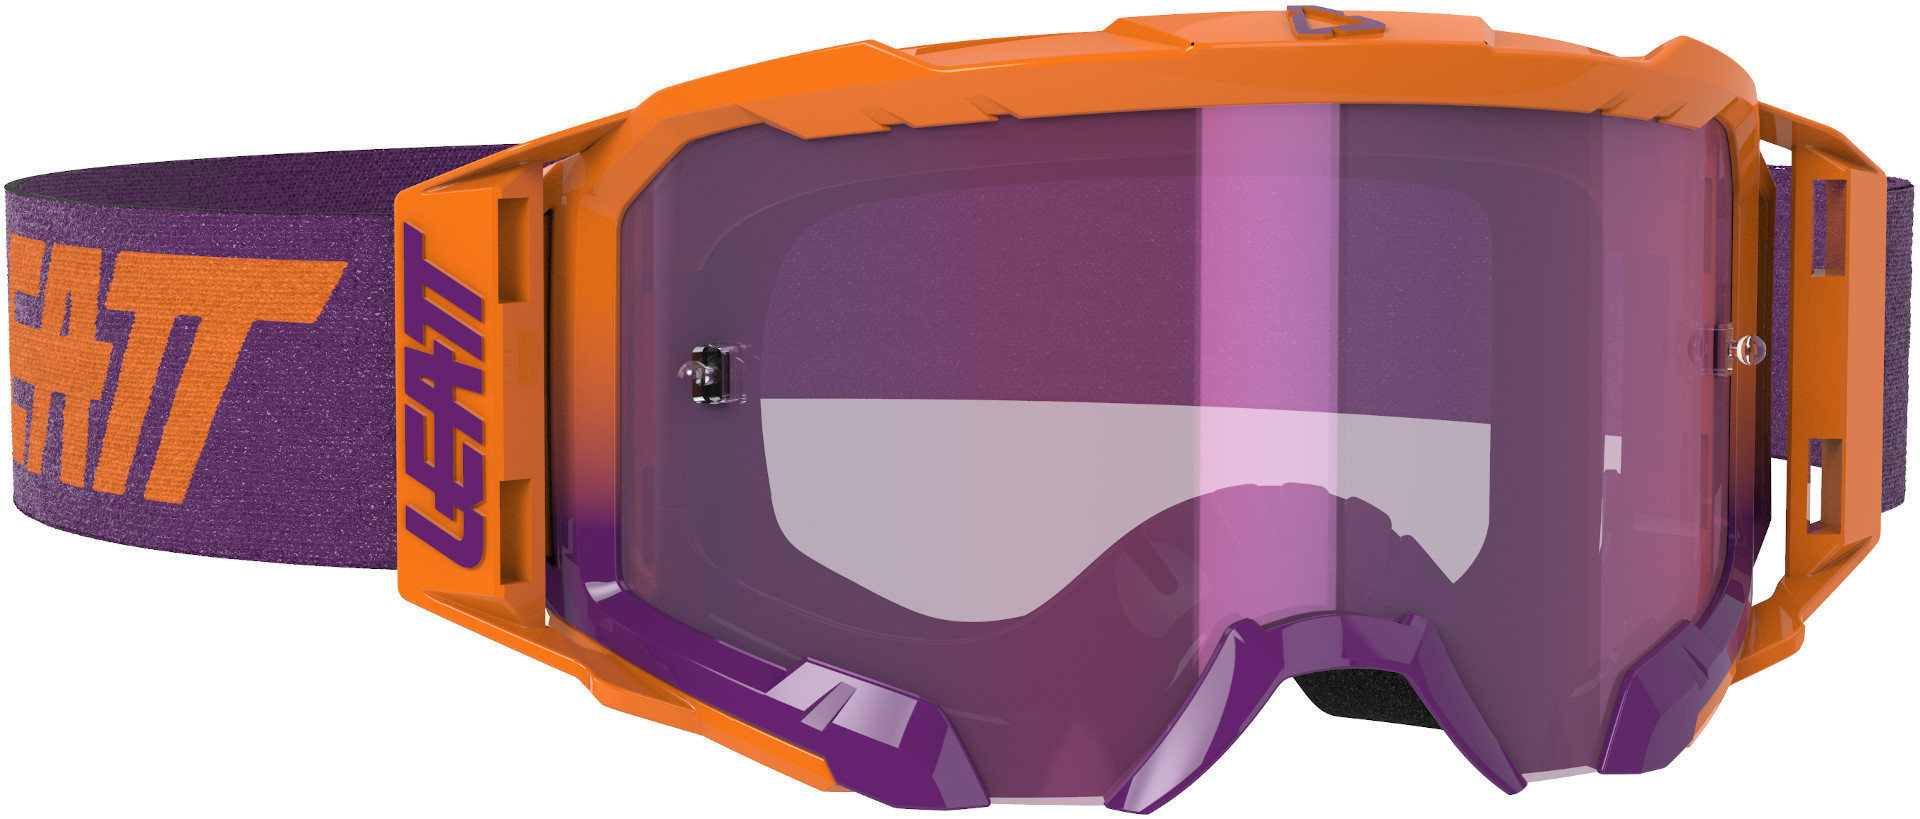 Очки Leatt Velocity 5.5 Iriz Мотокросс, пурпурные